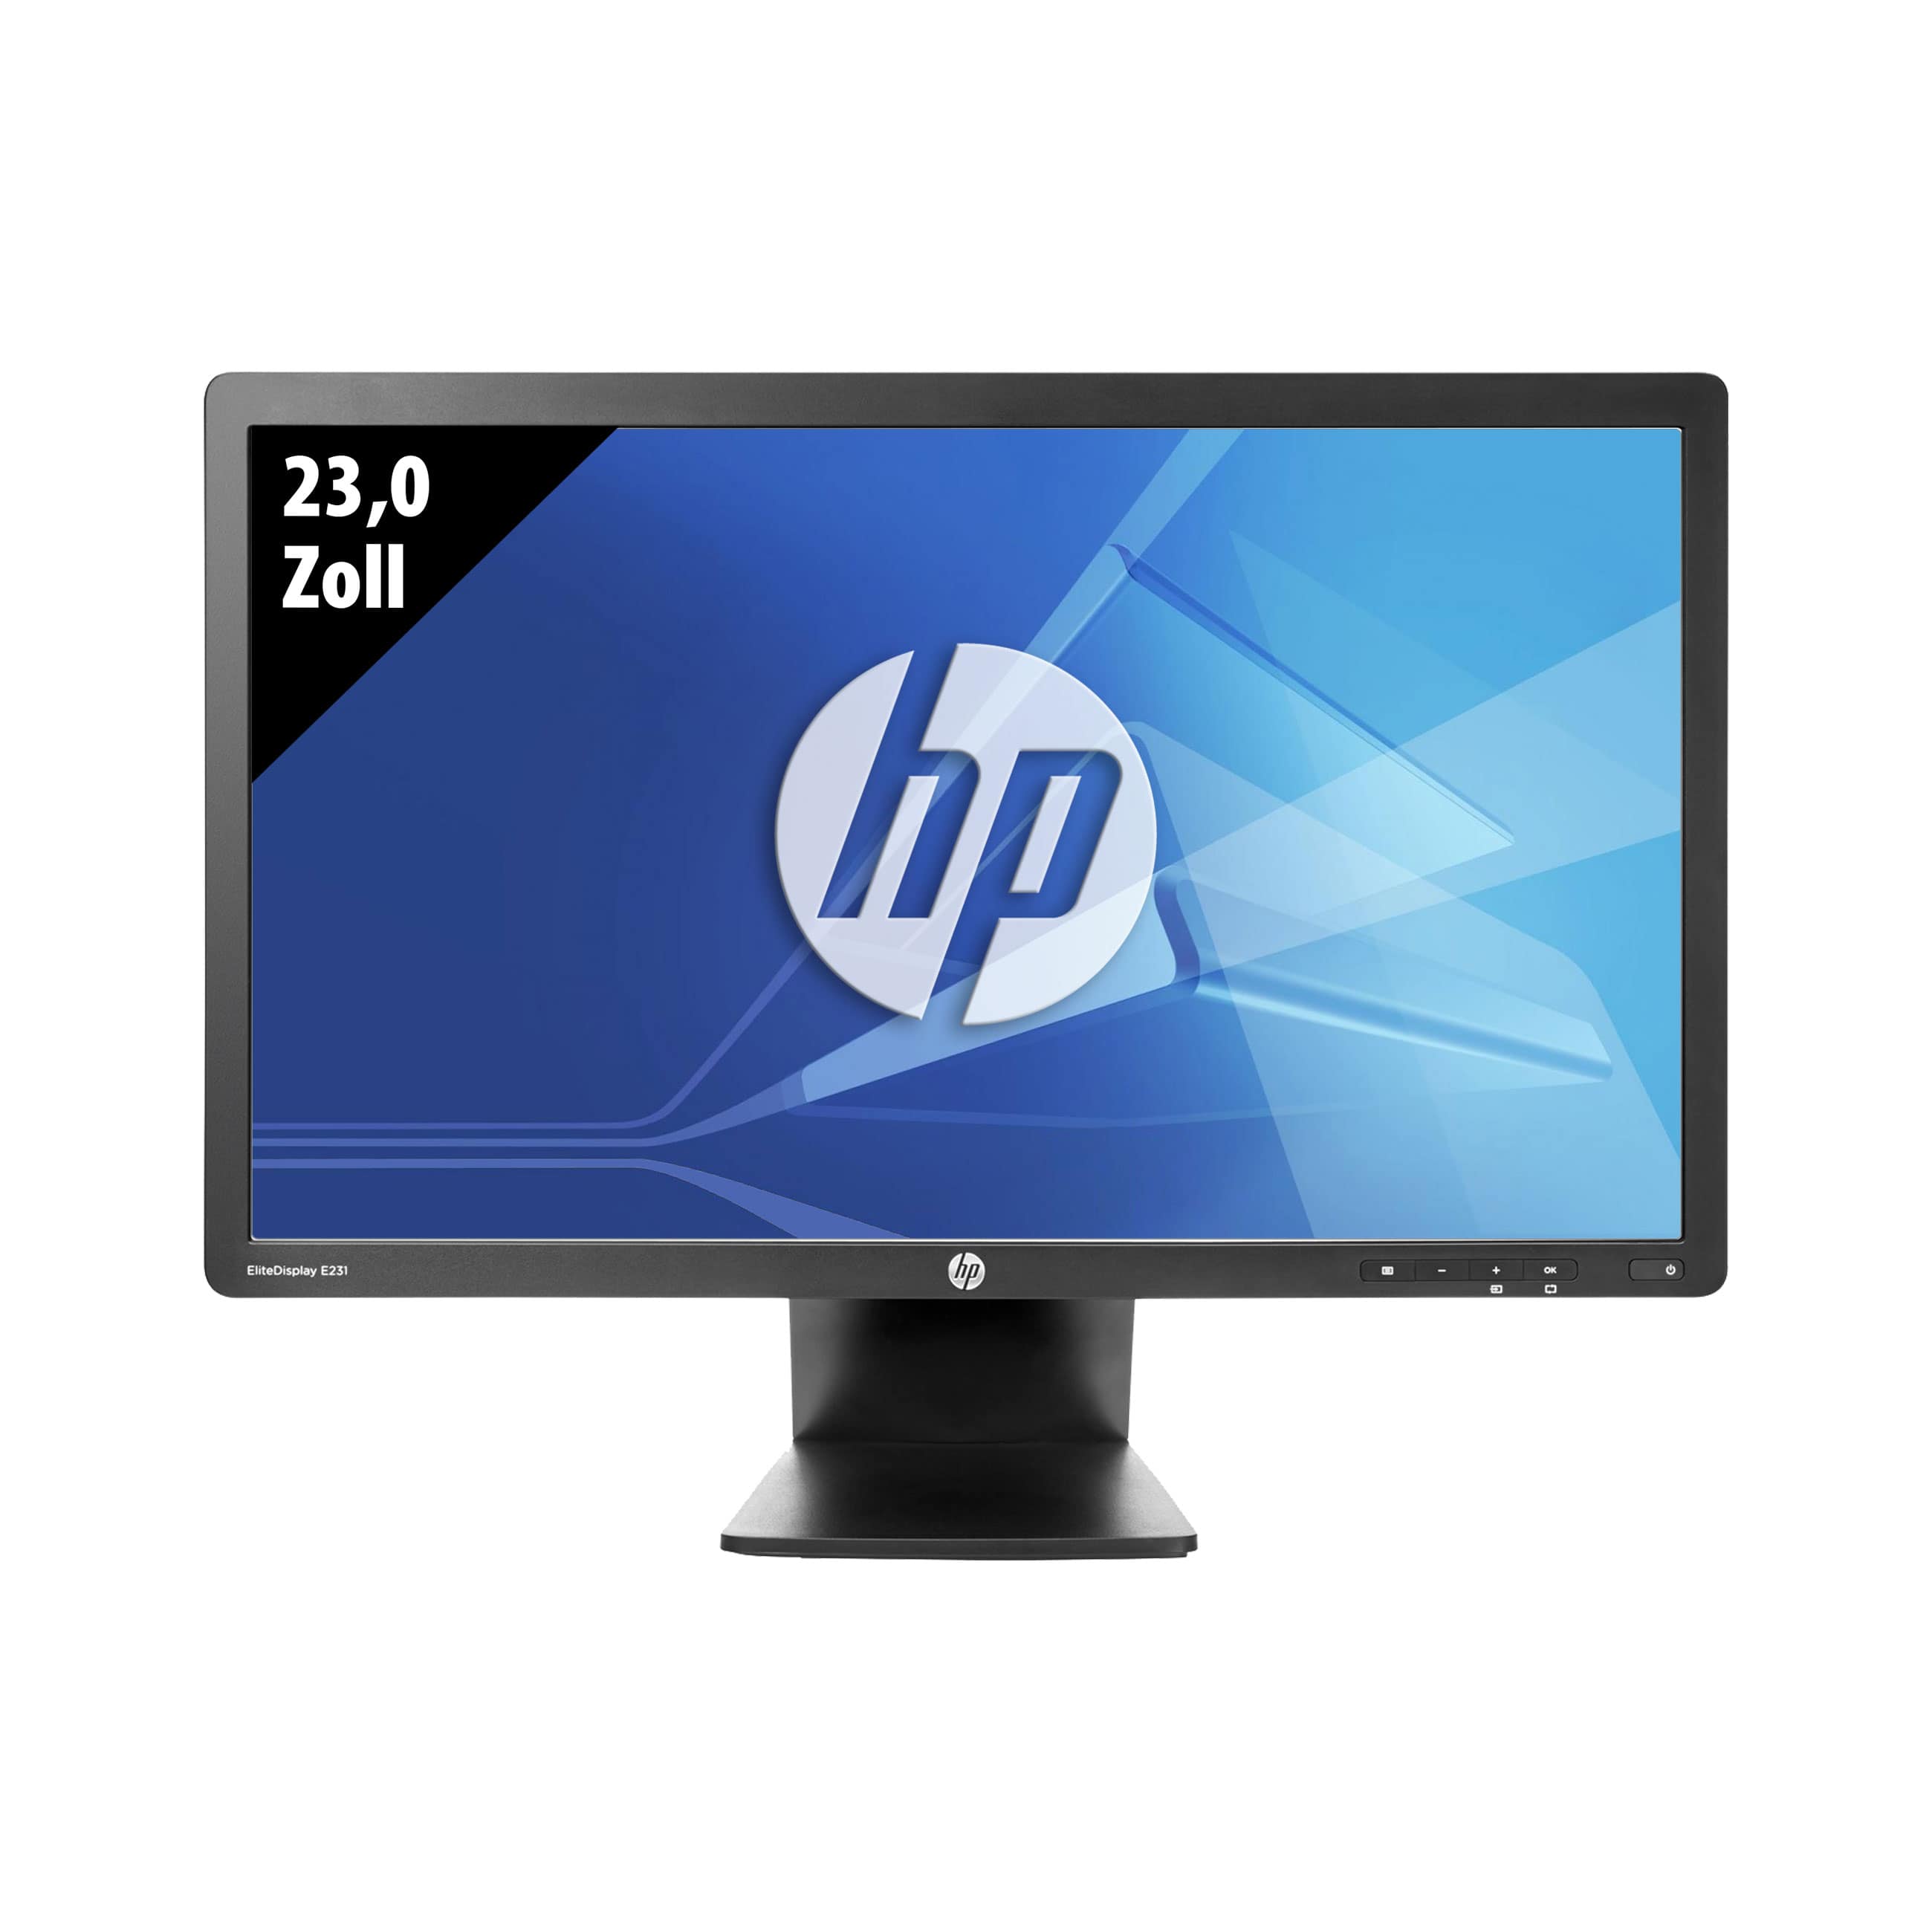 HP EliteDisplay E231 - 1920 x 1080 - FHD - 23,0 Zoll - 5 ms - Schwarz